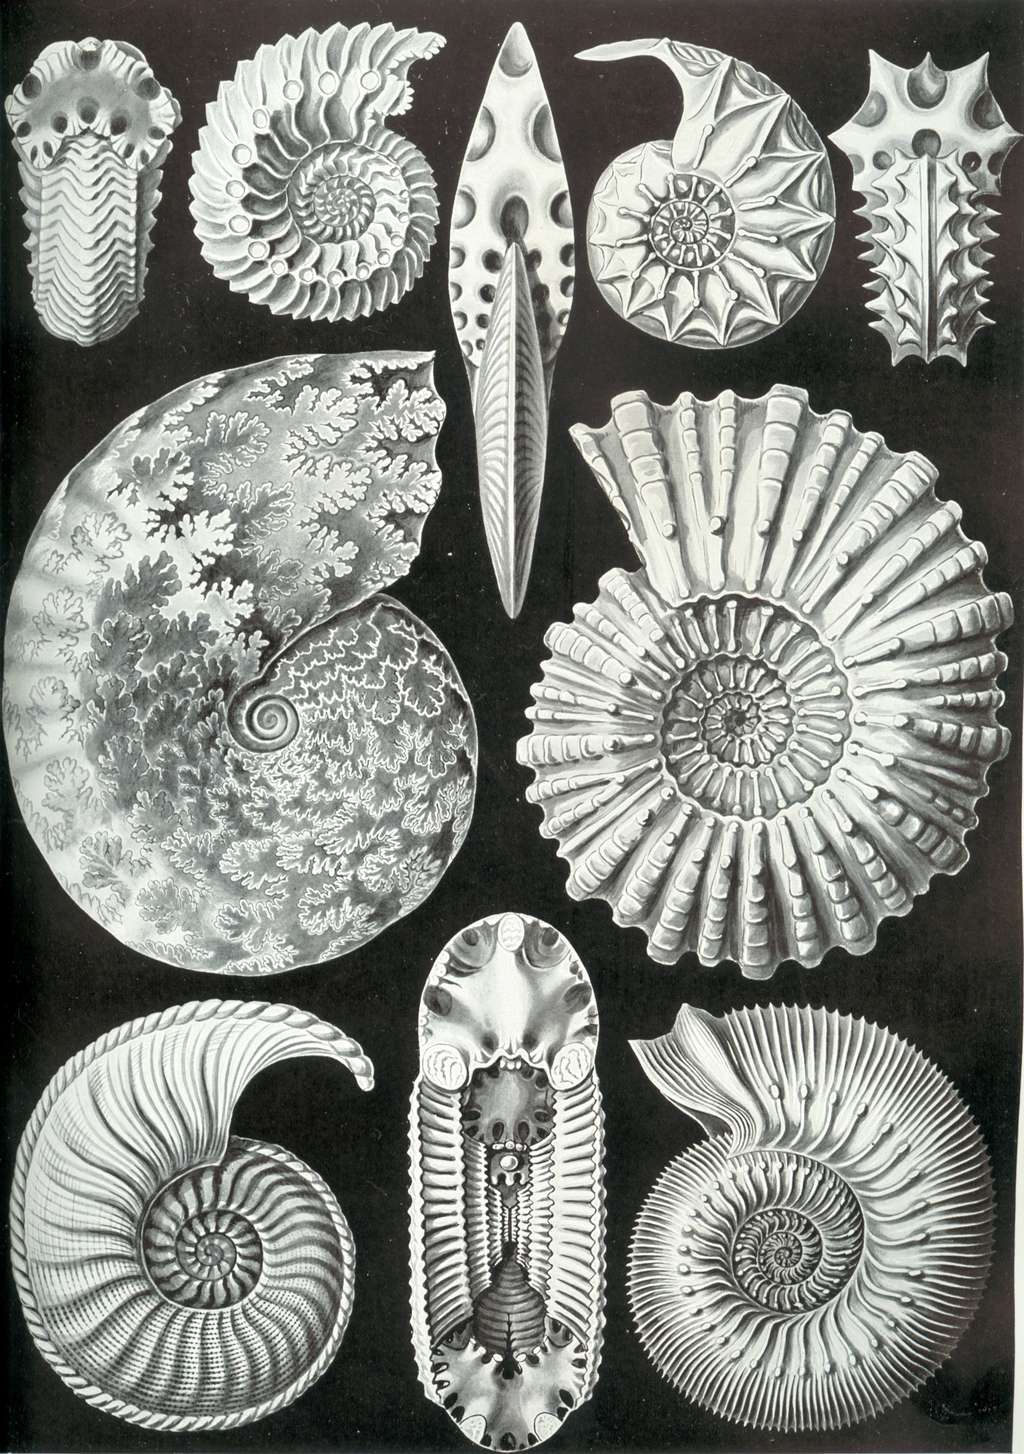 Exemples d'ammonites dessinés par Ernst Haeckel dans <em>Kunstformen der Natur</em> paru en 1899. © Ernst Haeckel, Domaine public, <em>Wikimedia Commons</em>